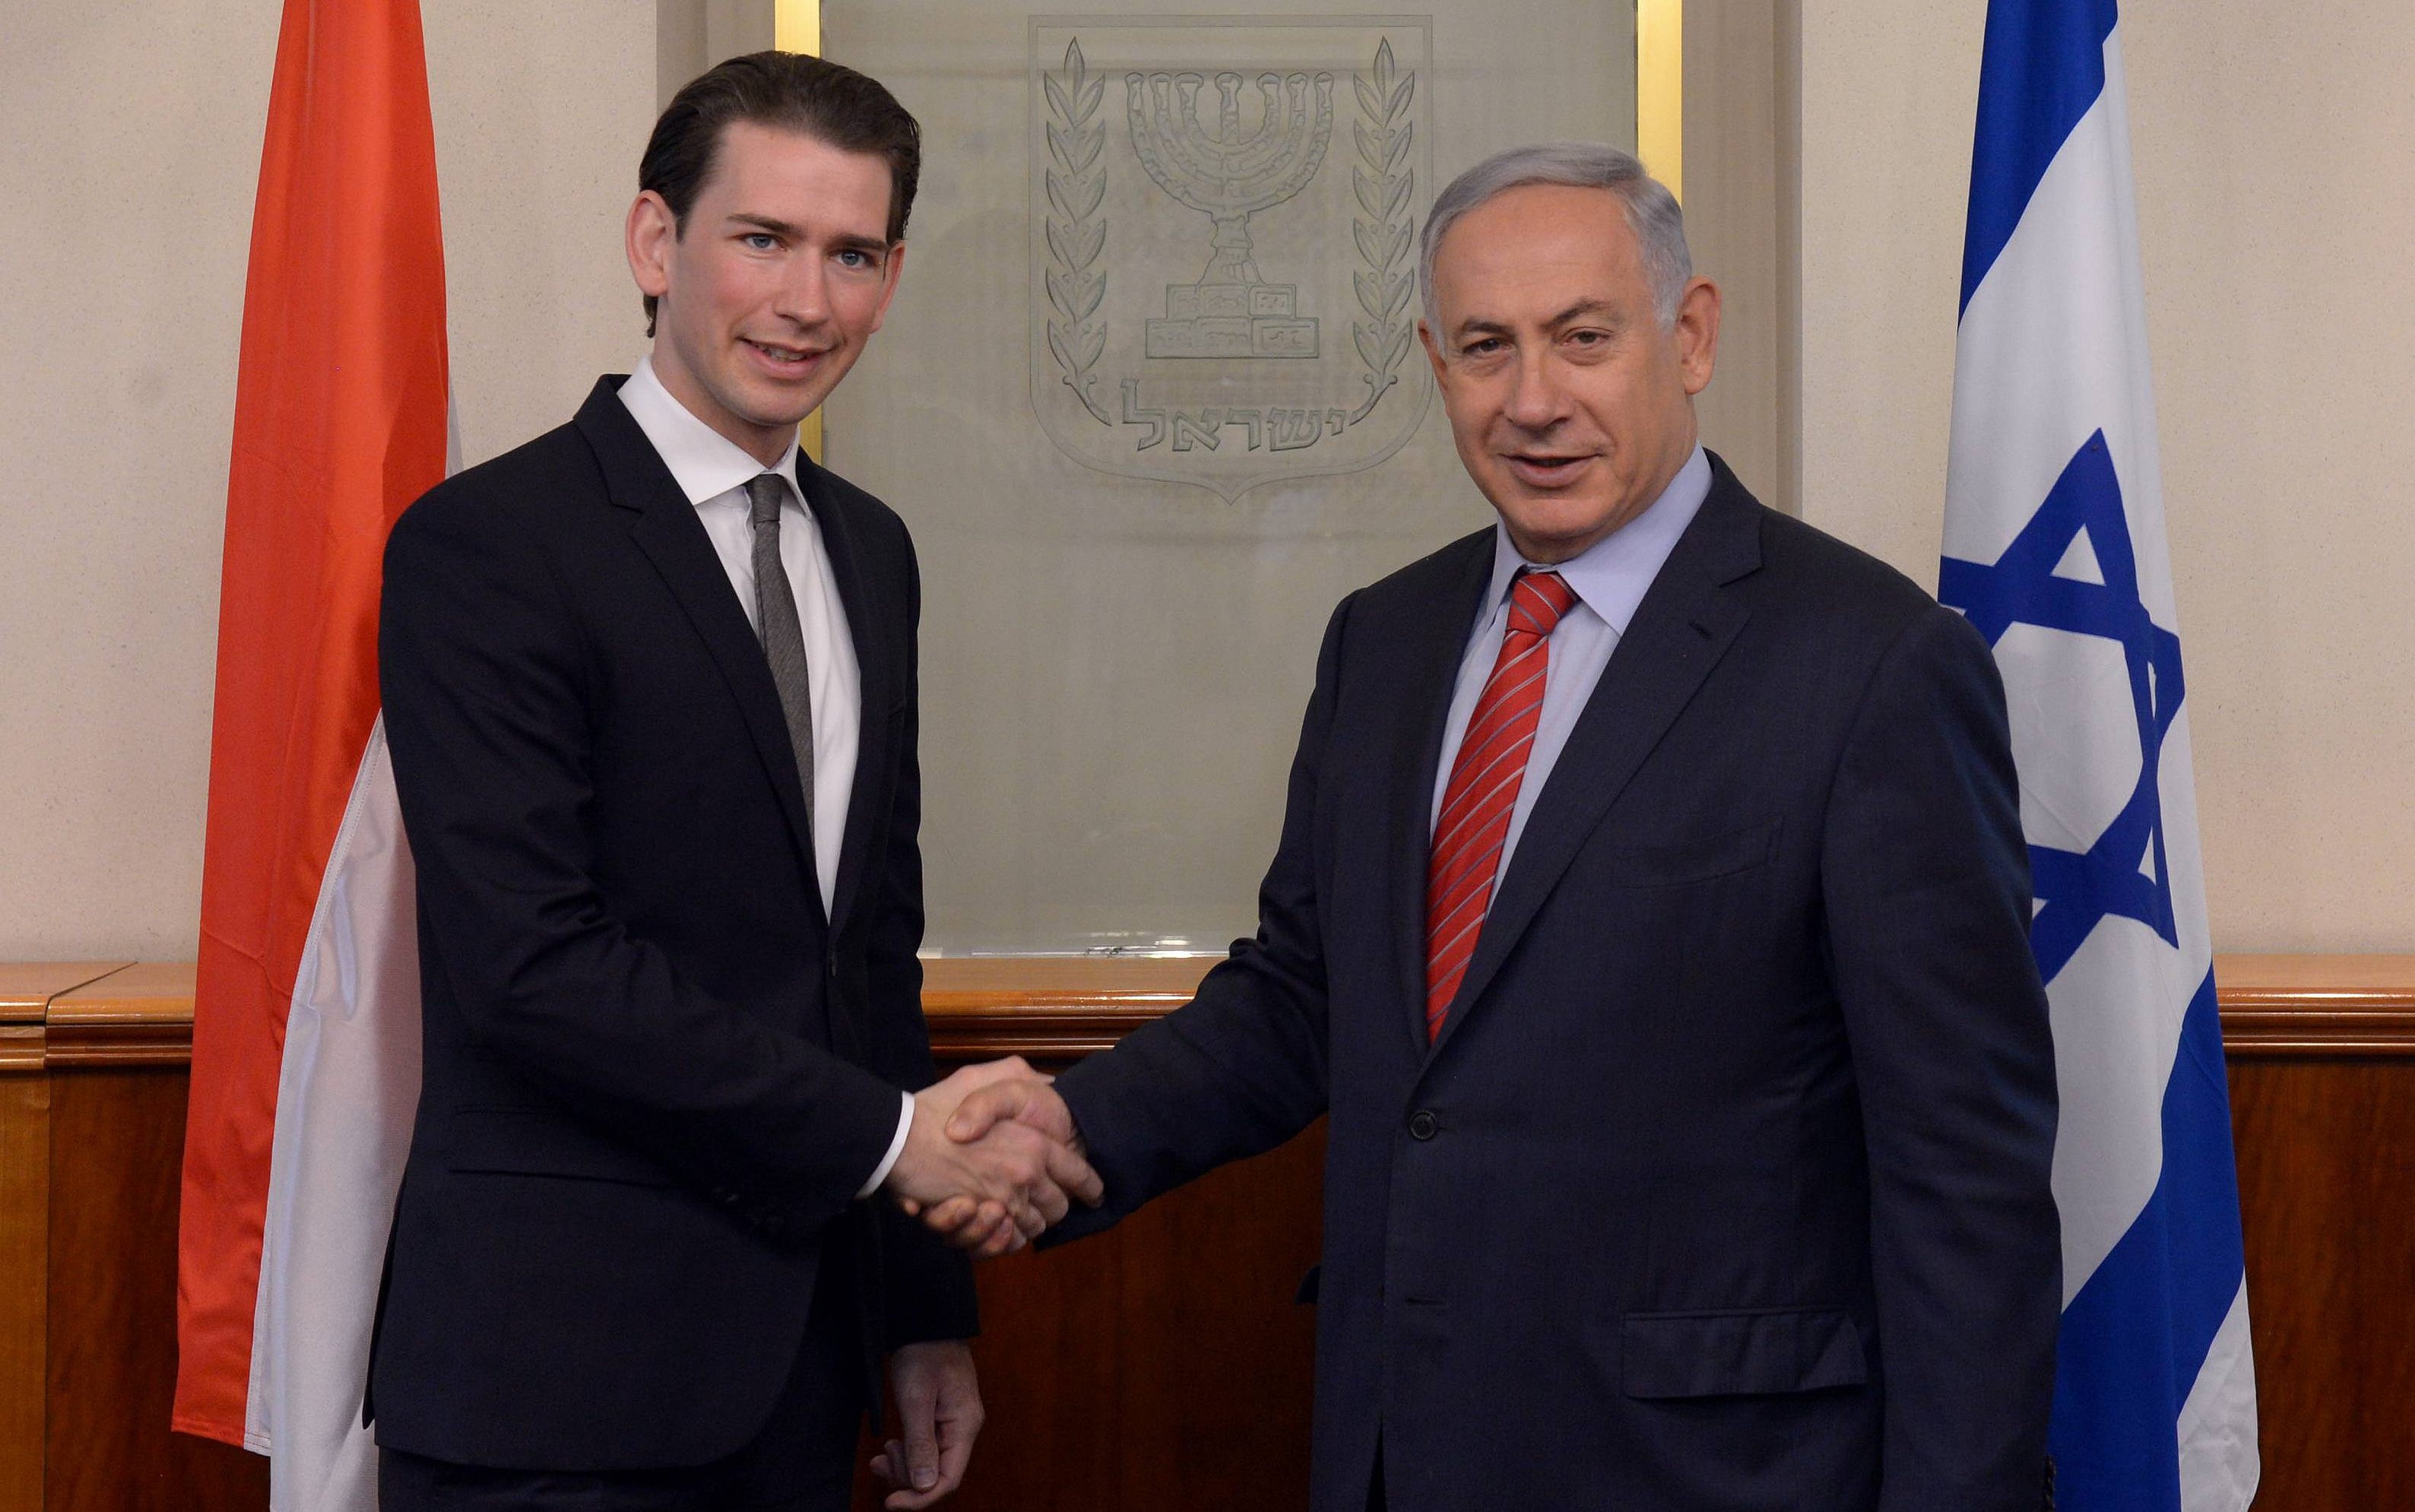 Resultado de imagen de sebastian kurz con Netanyahu imagenes